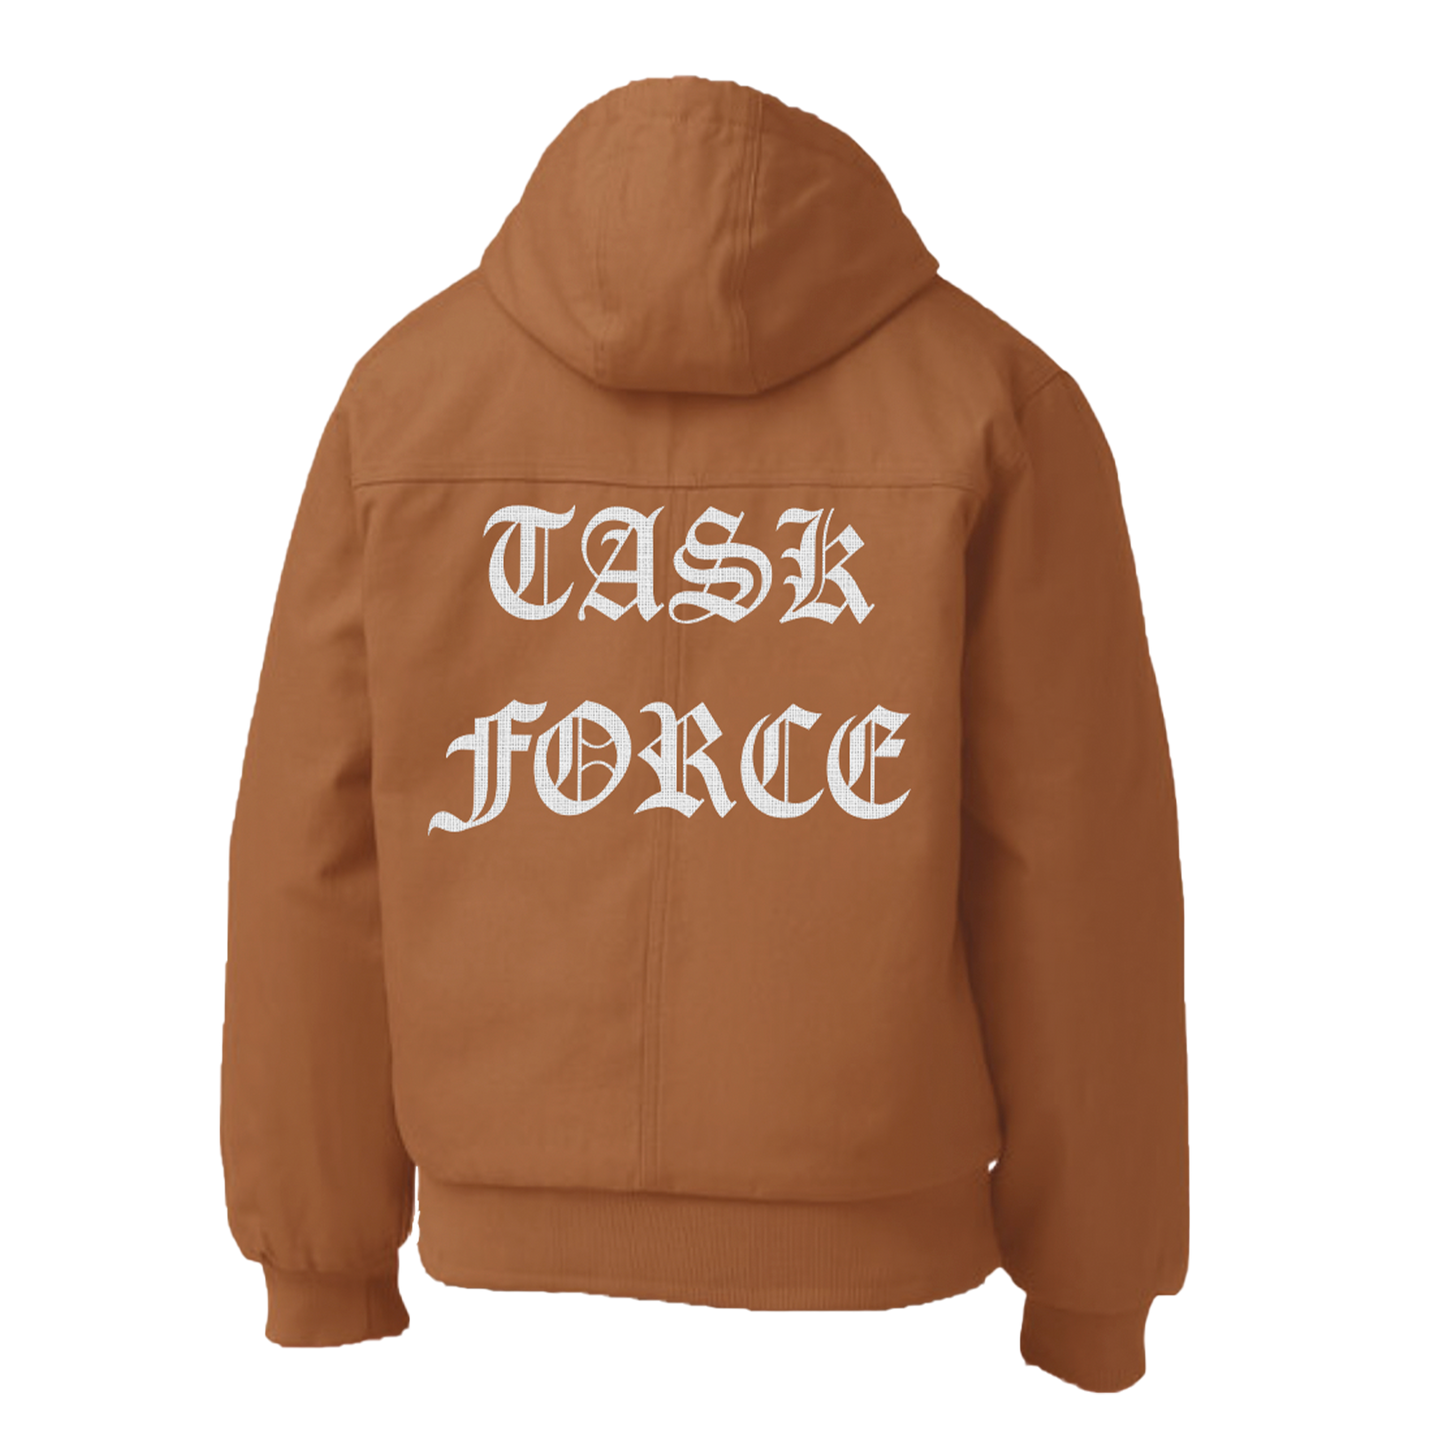 Task Force Work Jacket (Tan)